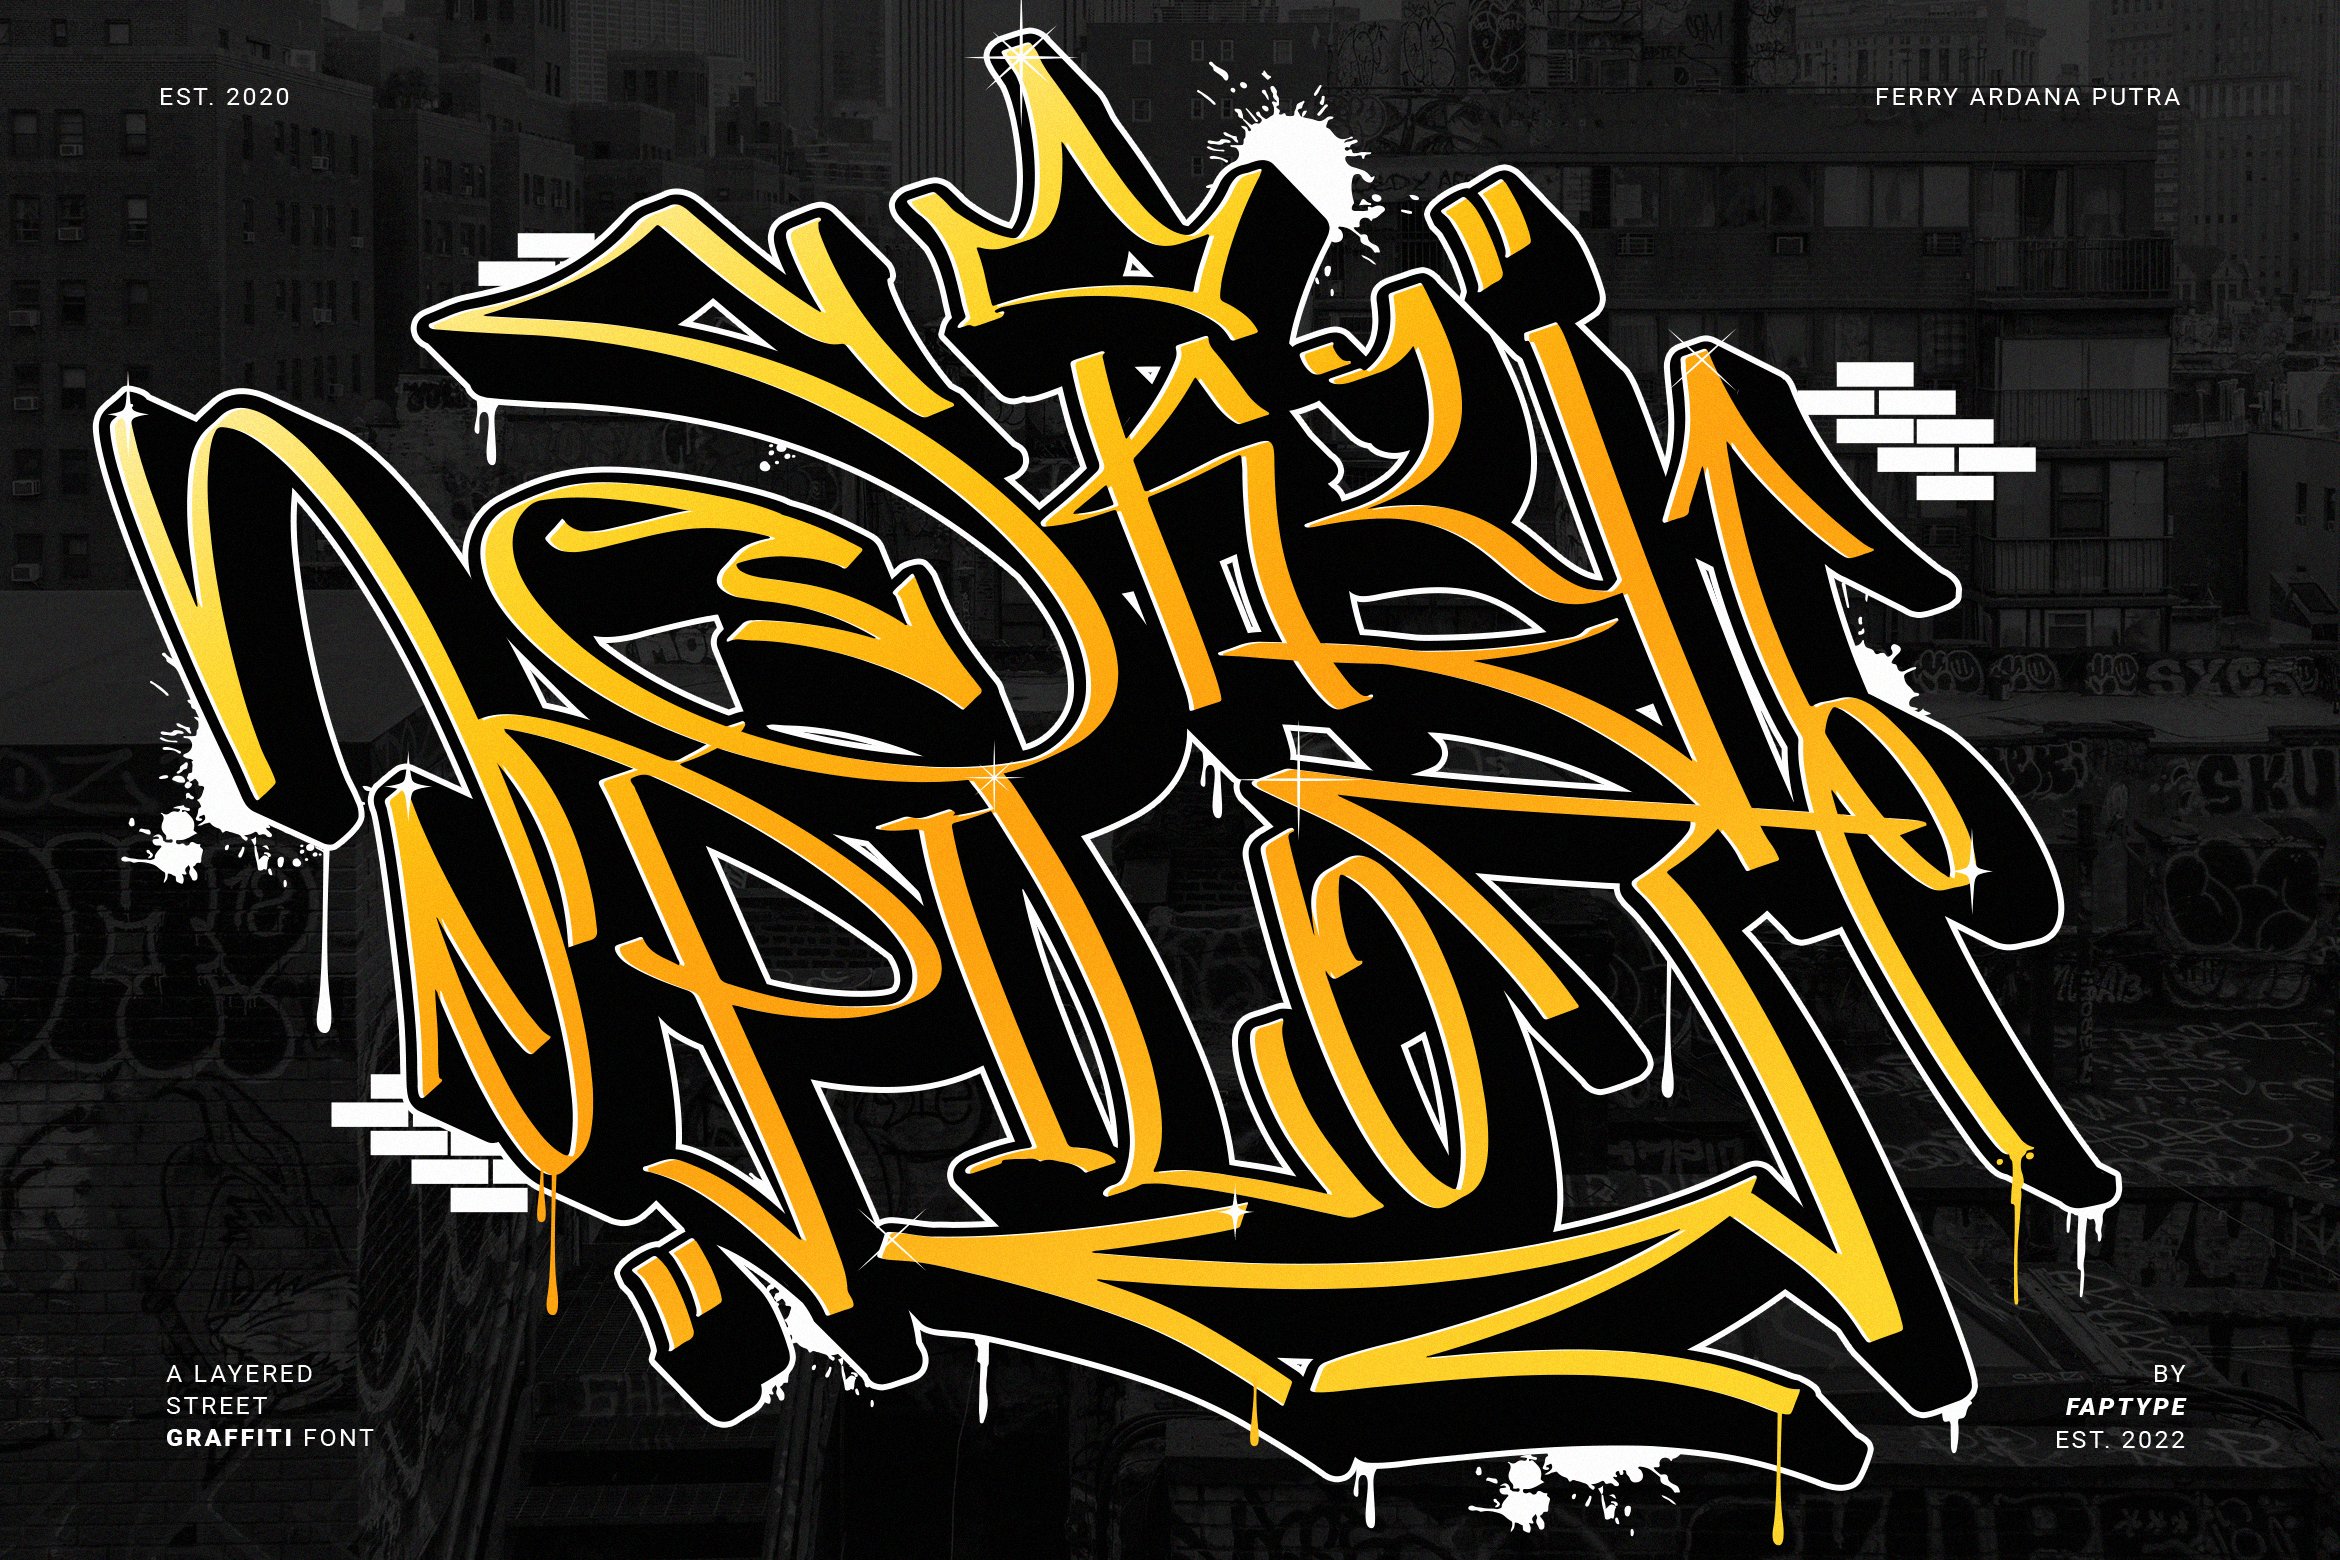 Skypilot | Layered Graffiti Font cover image.